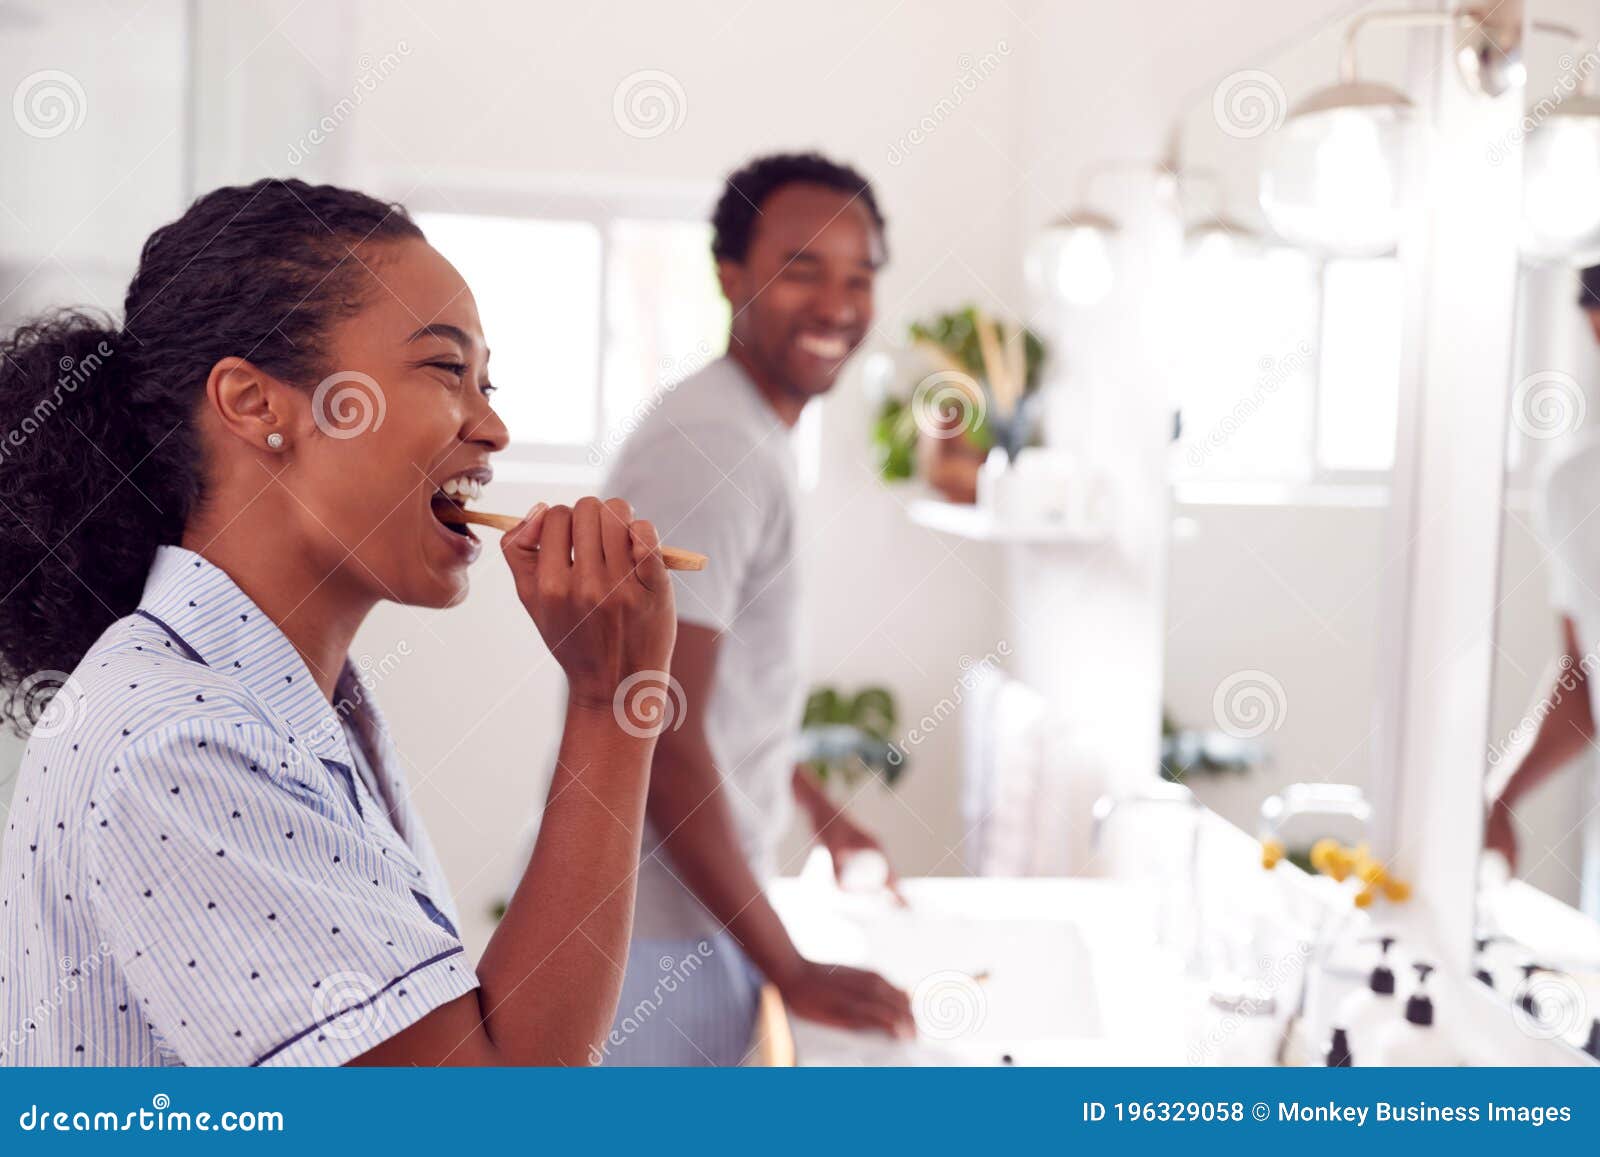 couple wearing pyjamas standing in bathroom at sink brushing teeth in the morning